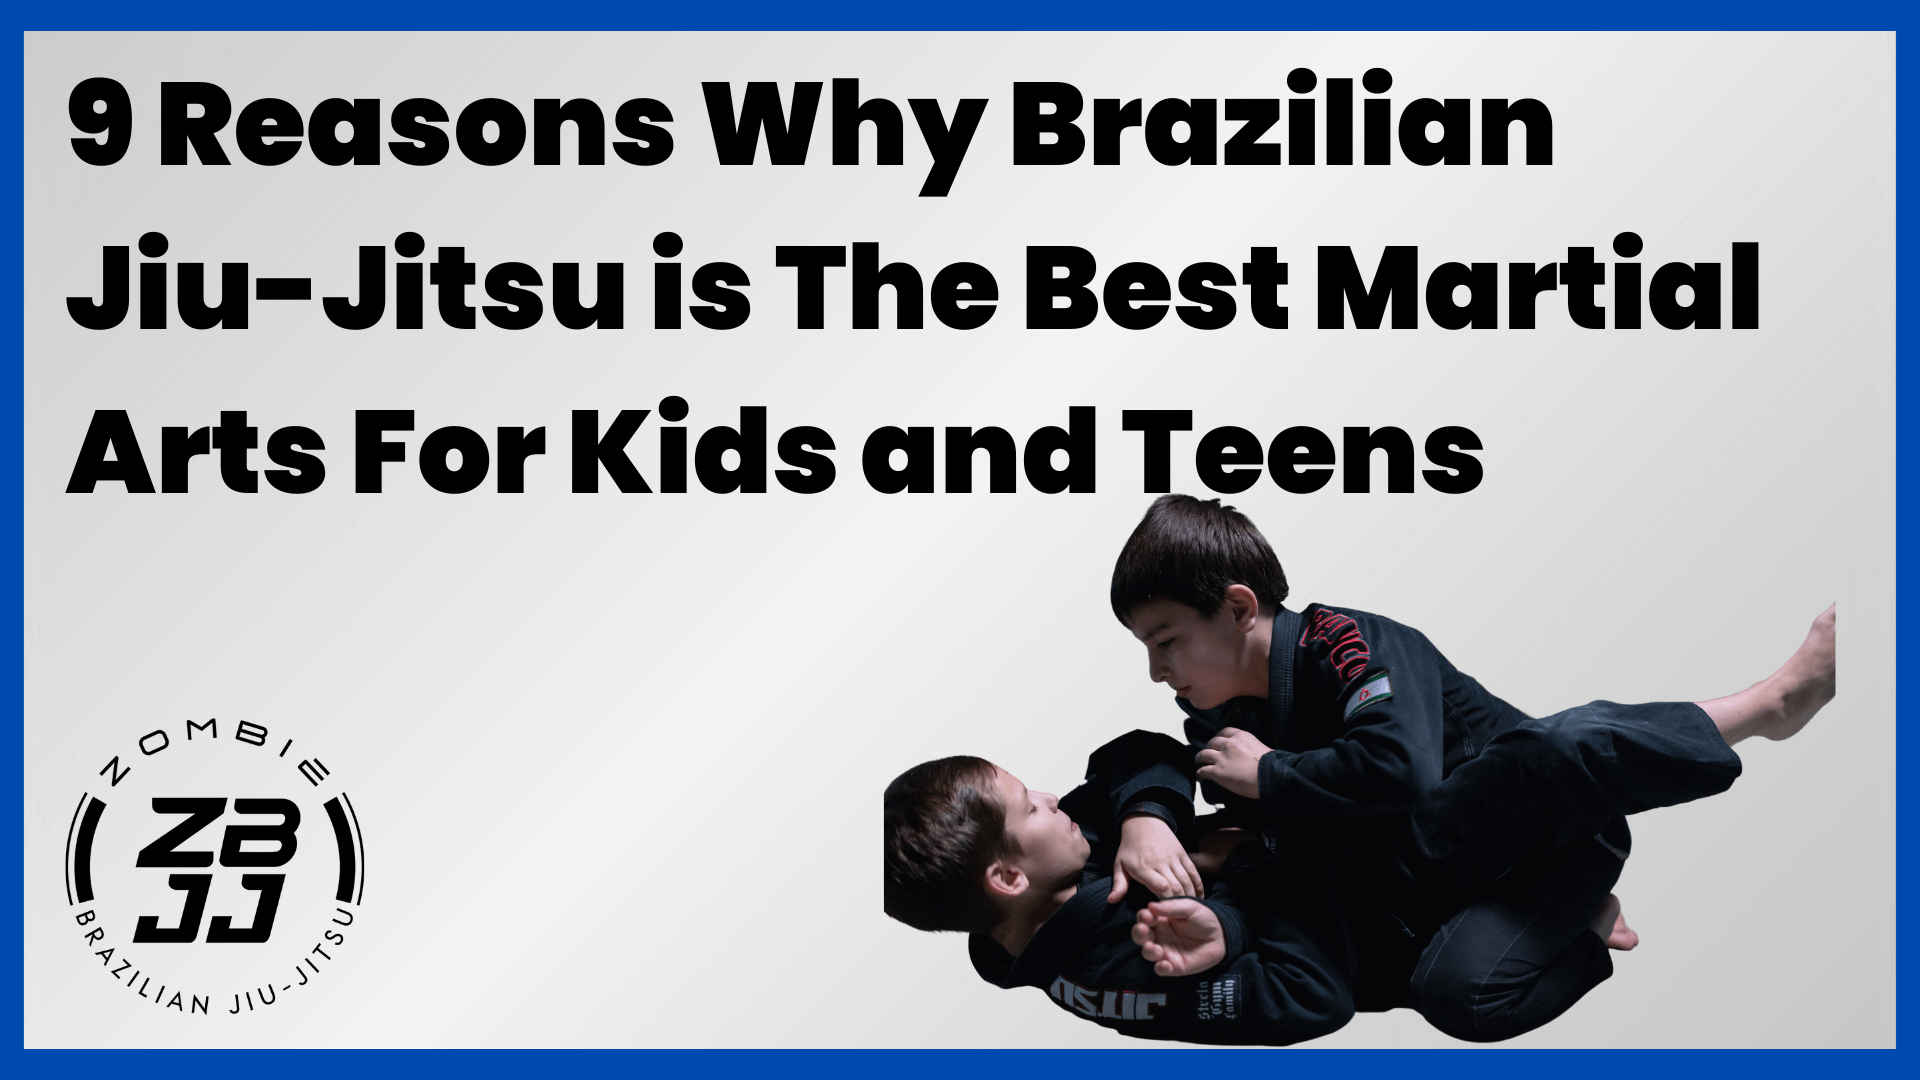 9 Reasons why Brazilian Jiu-Jitsu is the best martial art for kids and teens